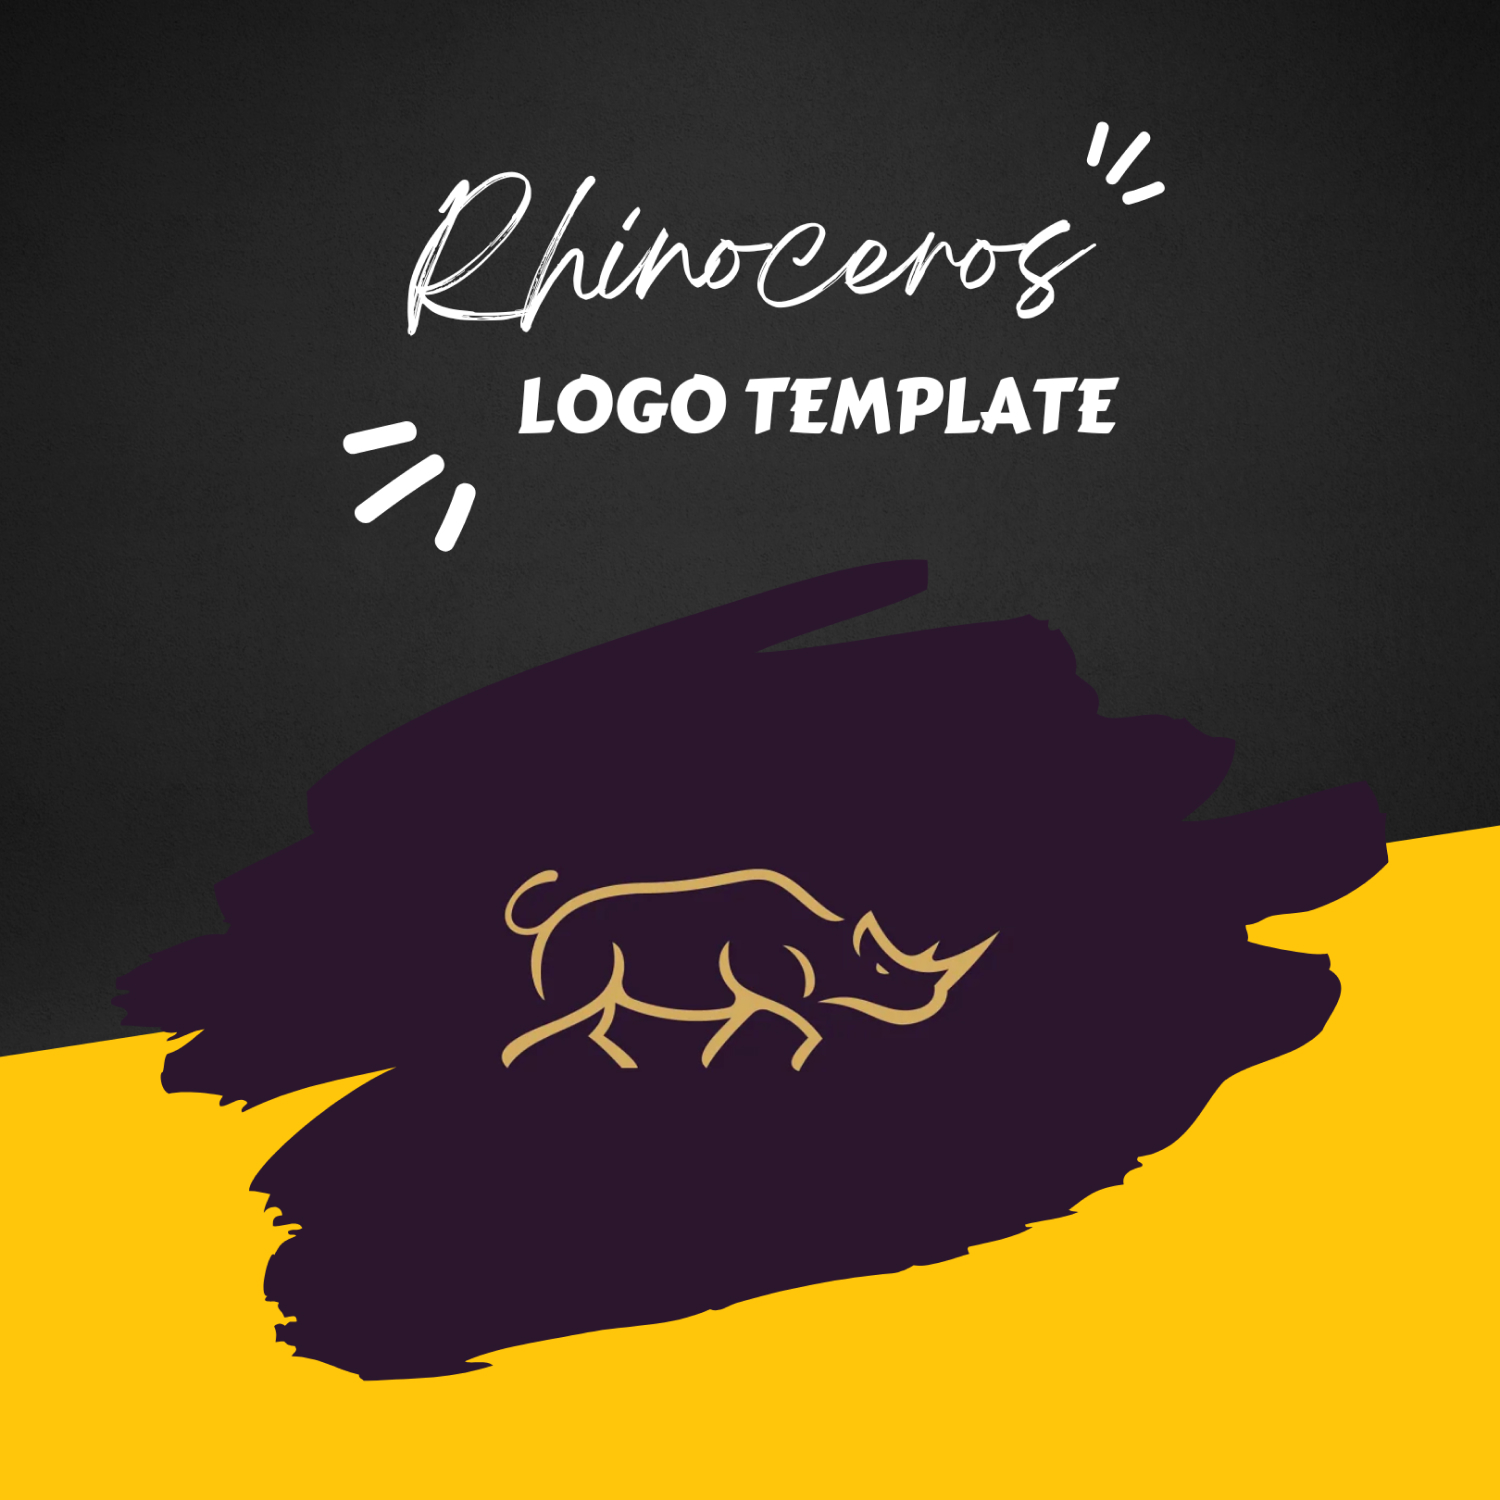 Rhinoceros logo template.